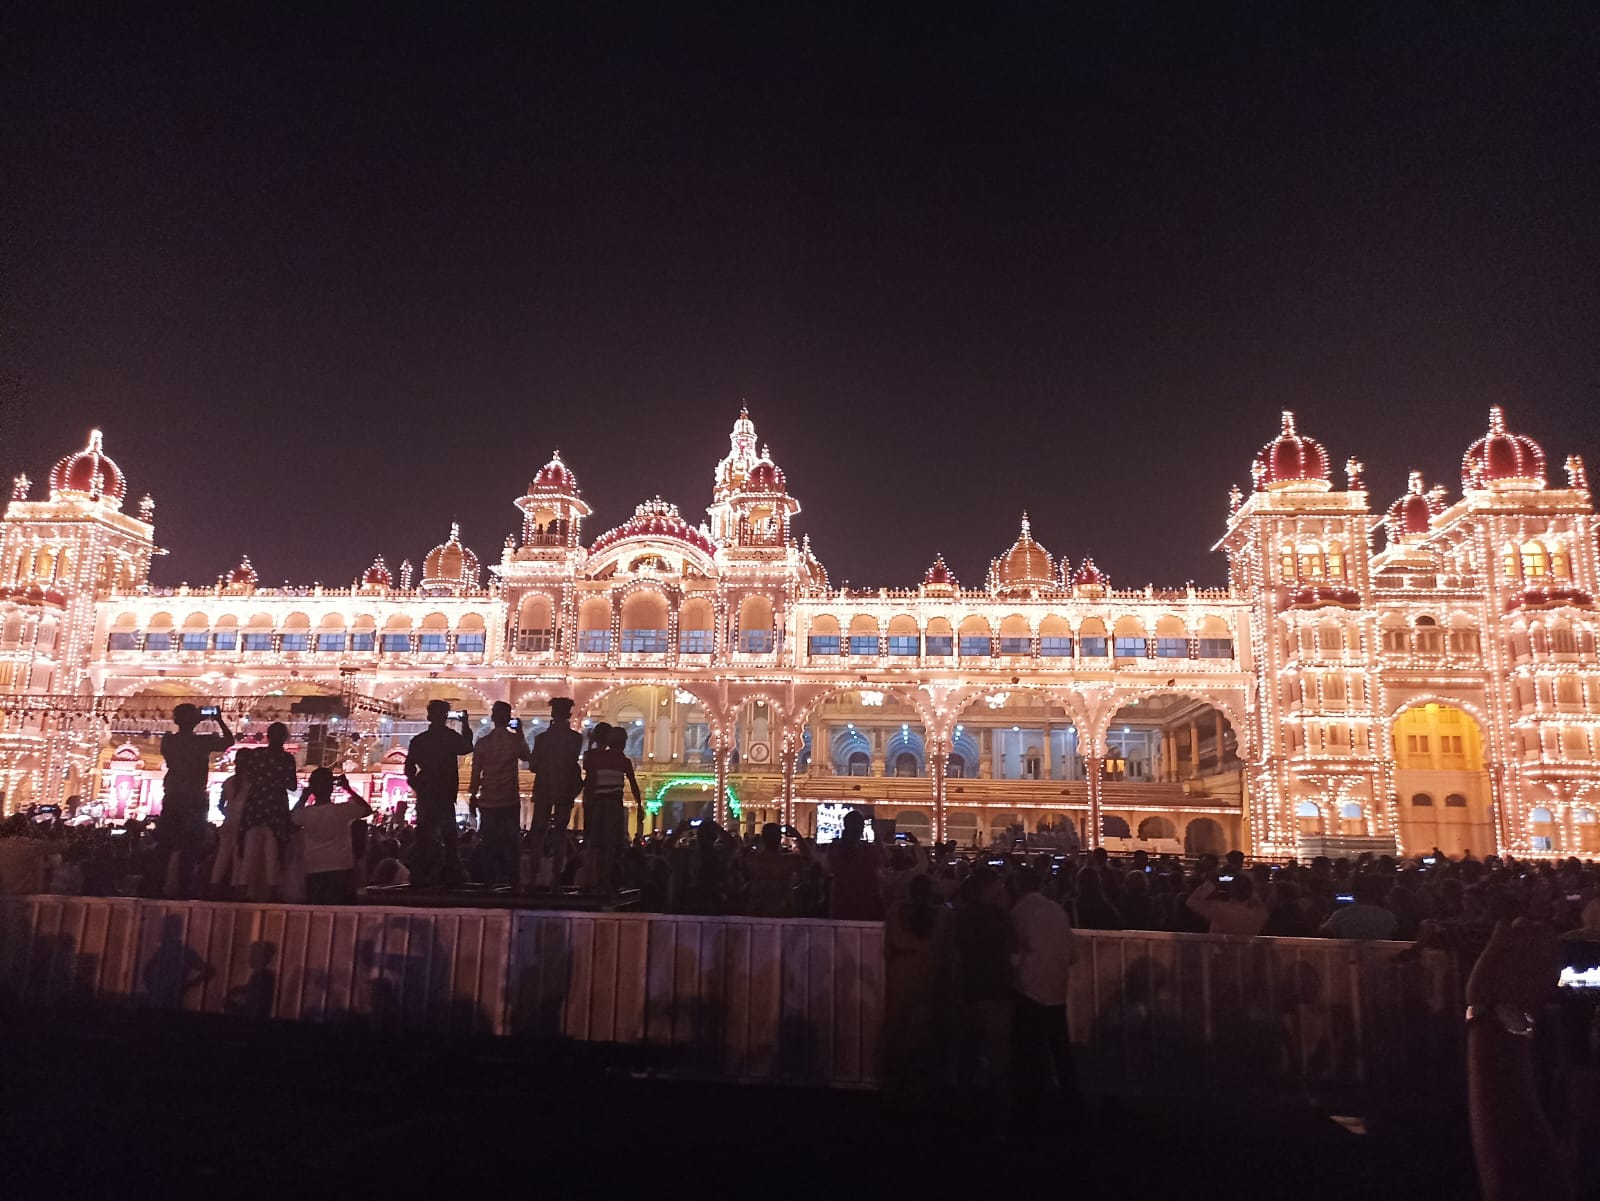 The Lit-up Mysore Palace